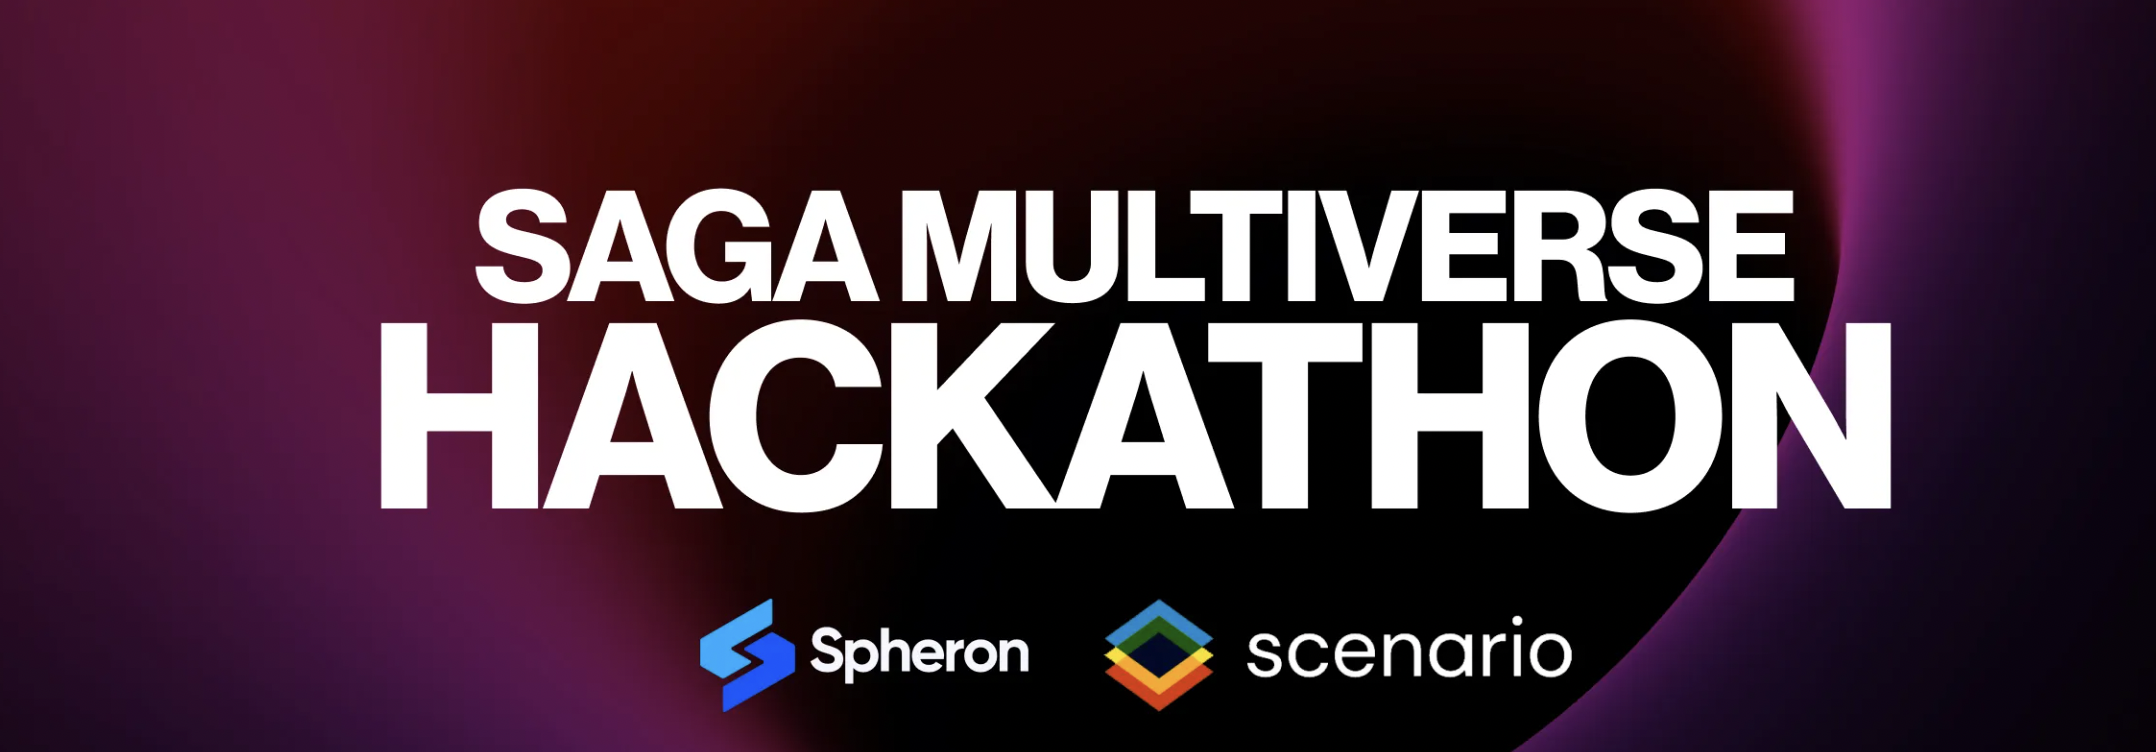 Saga Multiverse Hackathon Recap & Result Announcement